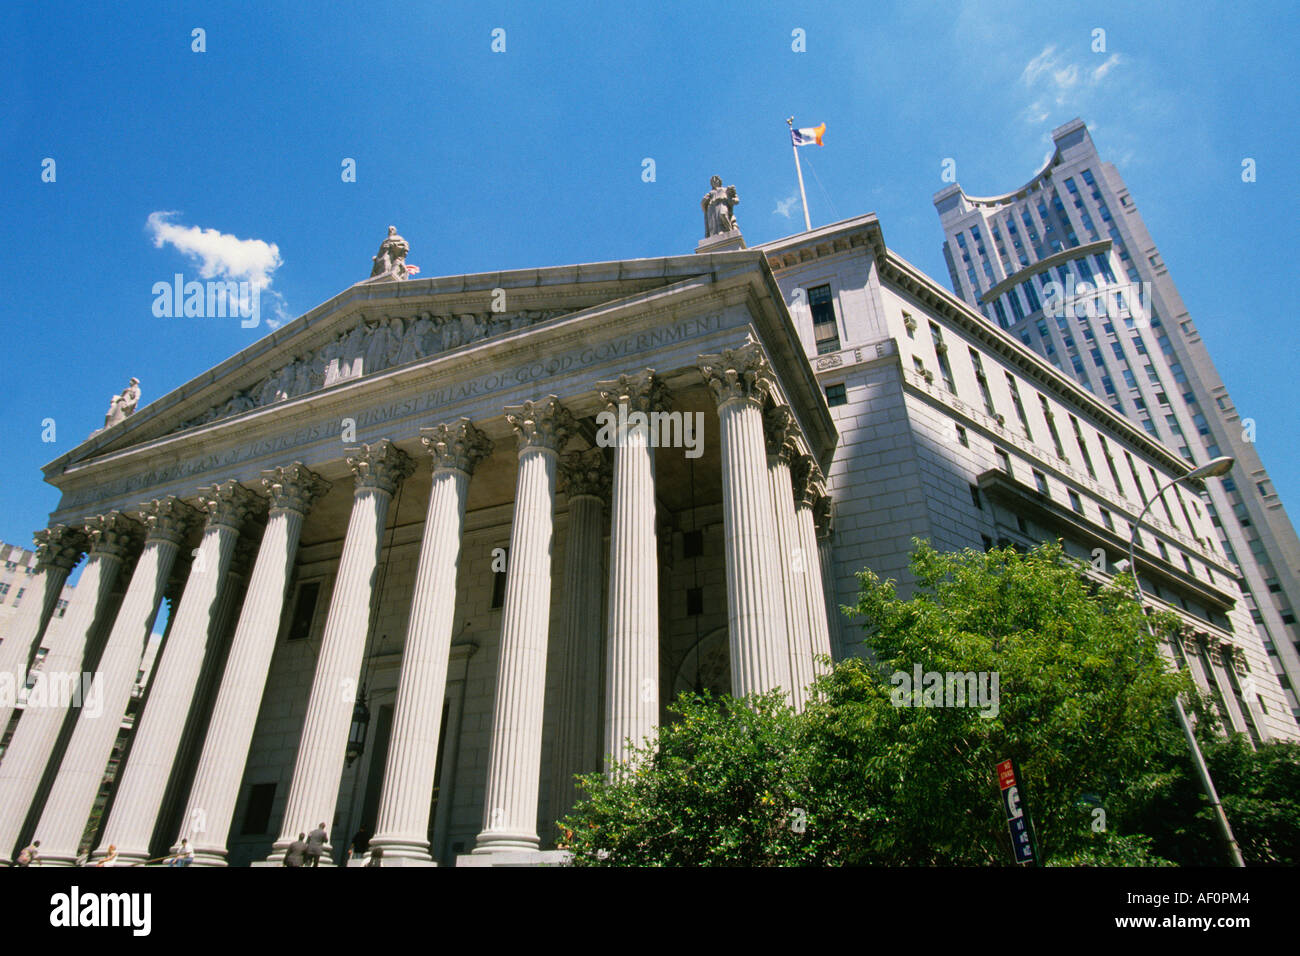 Oberstes Gericht Der Vereinigten Staaten. New York City Lower Manhattan NYC County Courthouse und Daniel Patrick Moynihan Courthouse. Foley Square USA Stockfoto